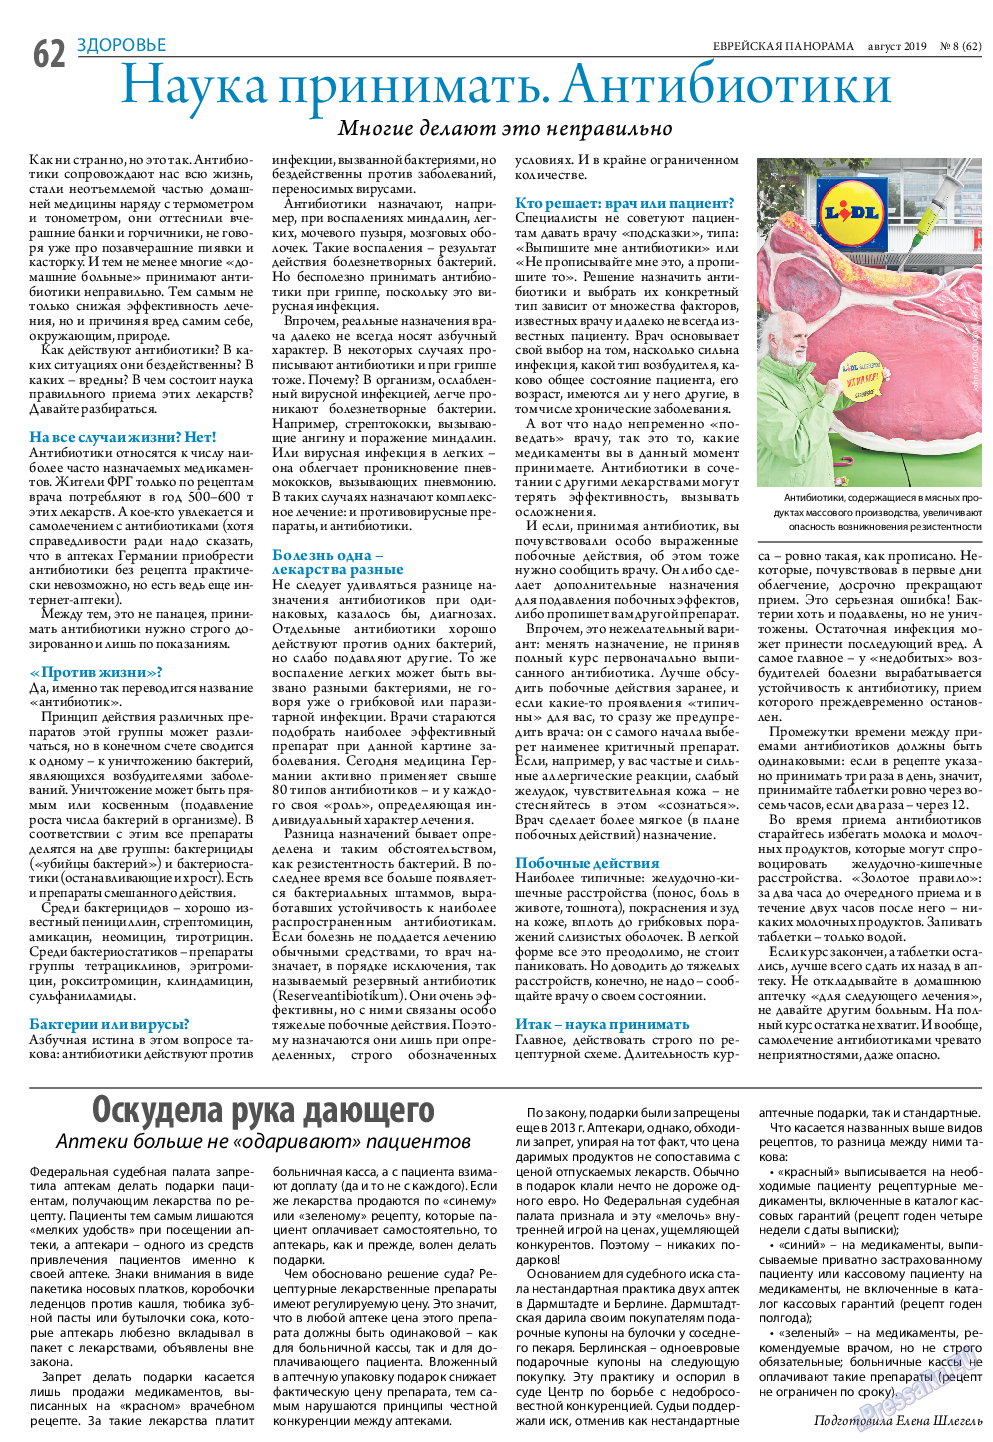 Еврейская панорама, газета. 2019 №8 стр.62